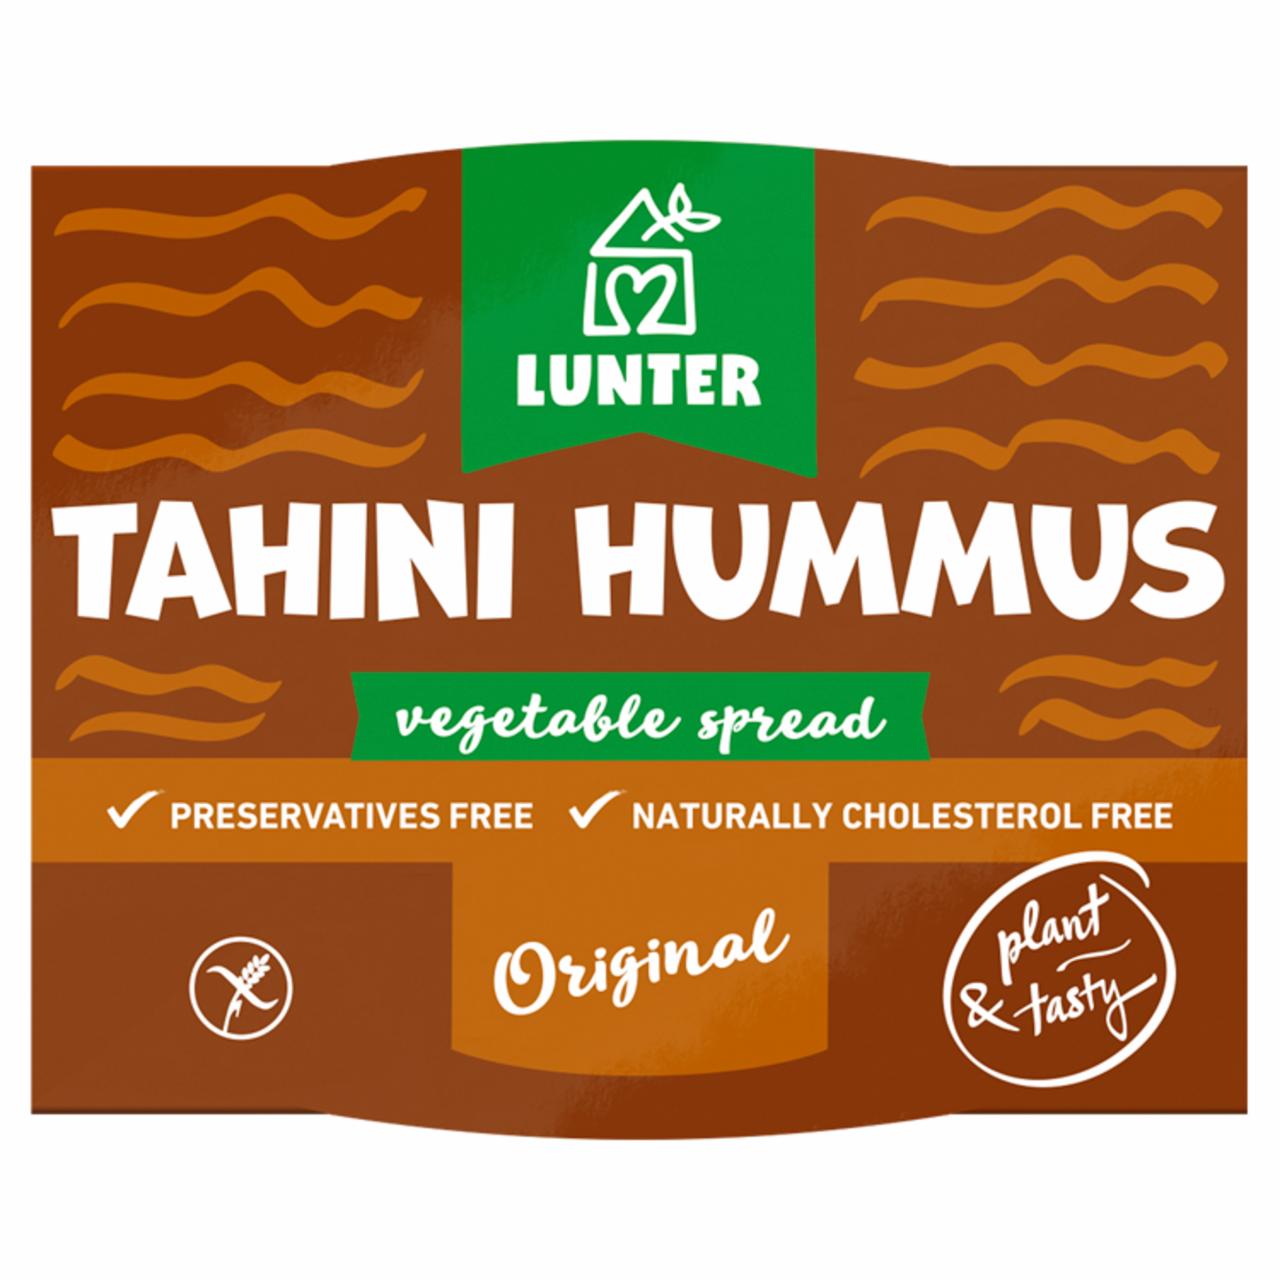 Zdjęcia - Lunter Tahini Hummus Pasta roślinna 115 g